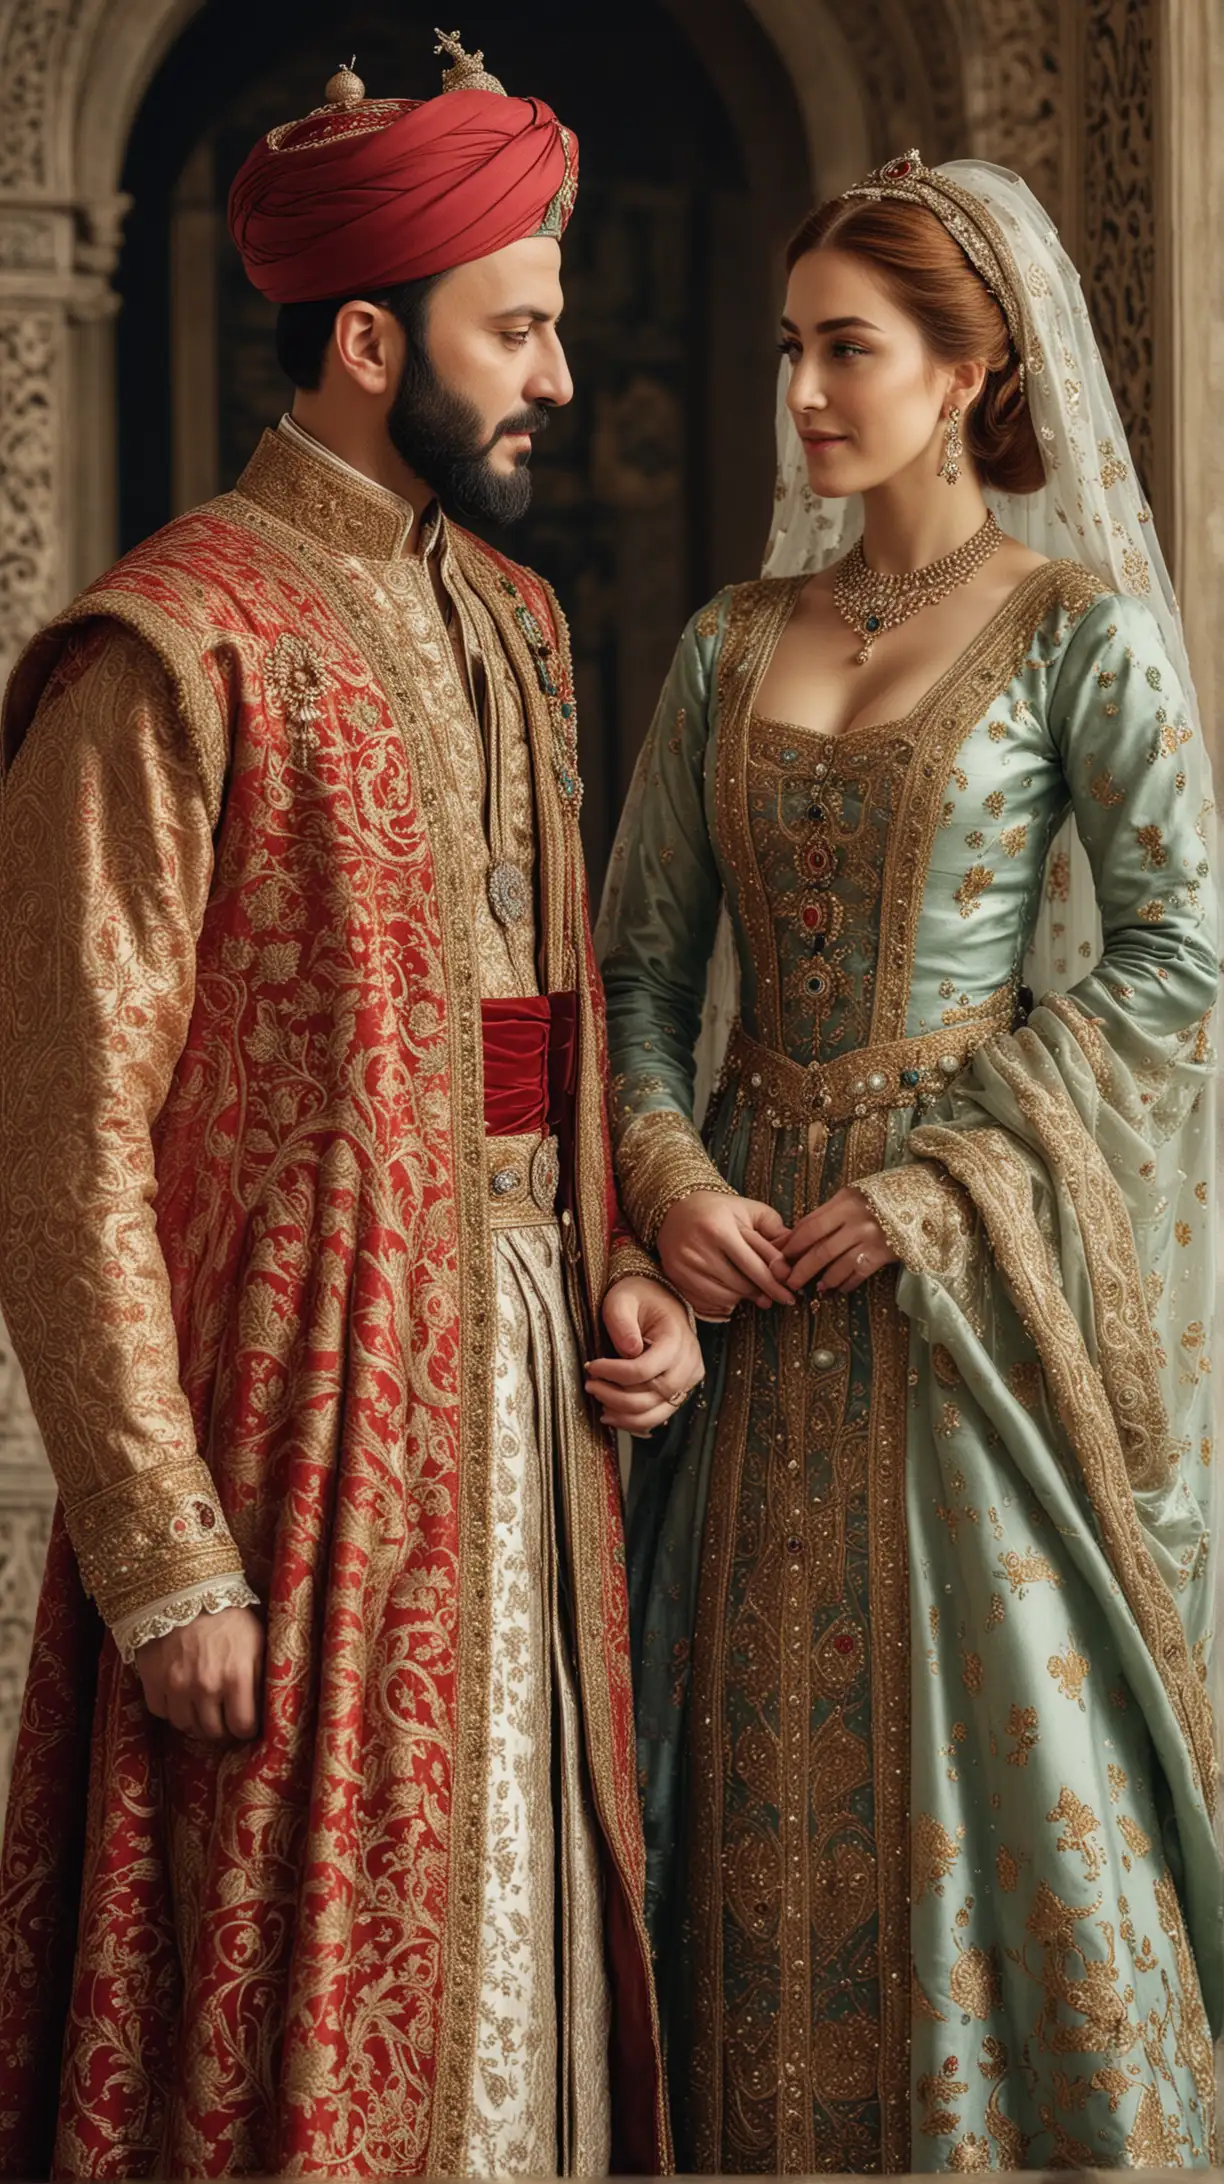 Royal Couple Suleiman and Hurrem in Elegant Attire